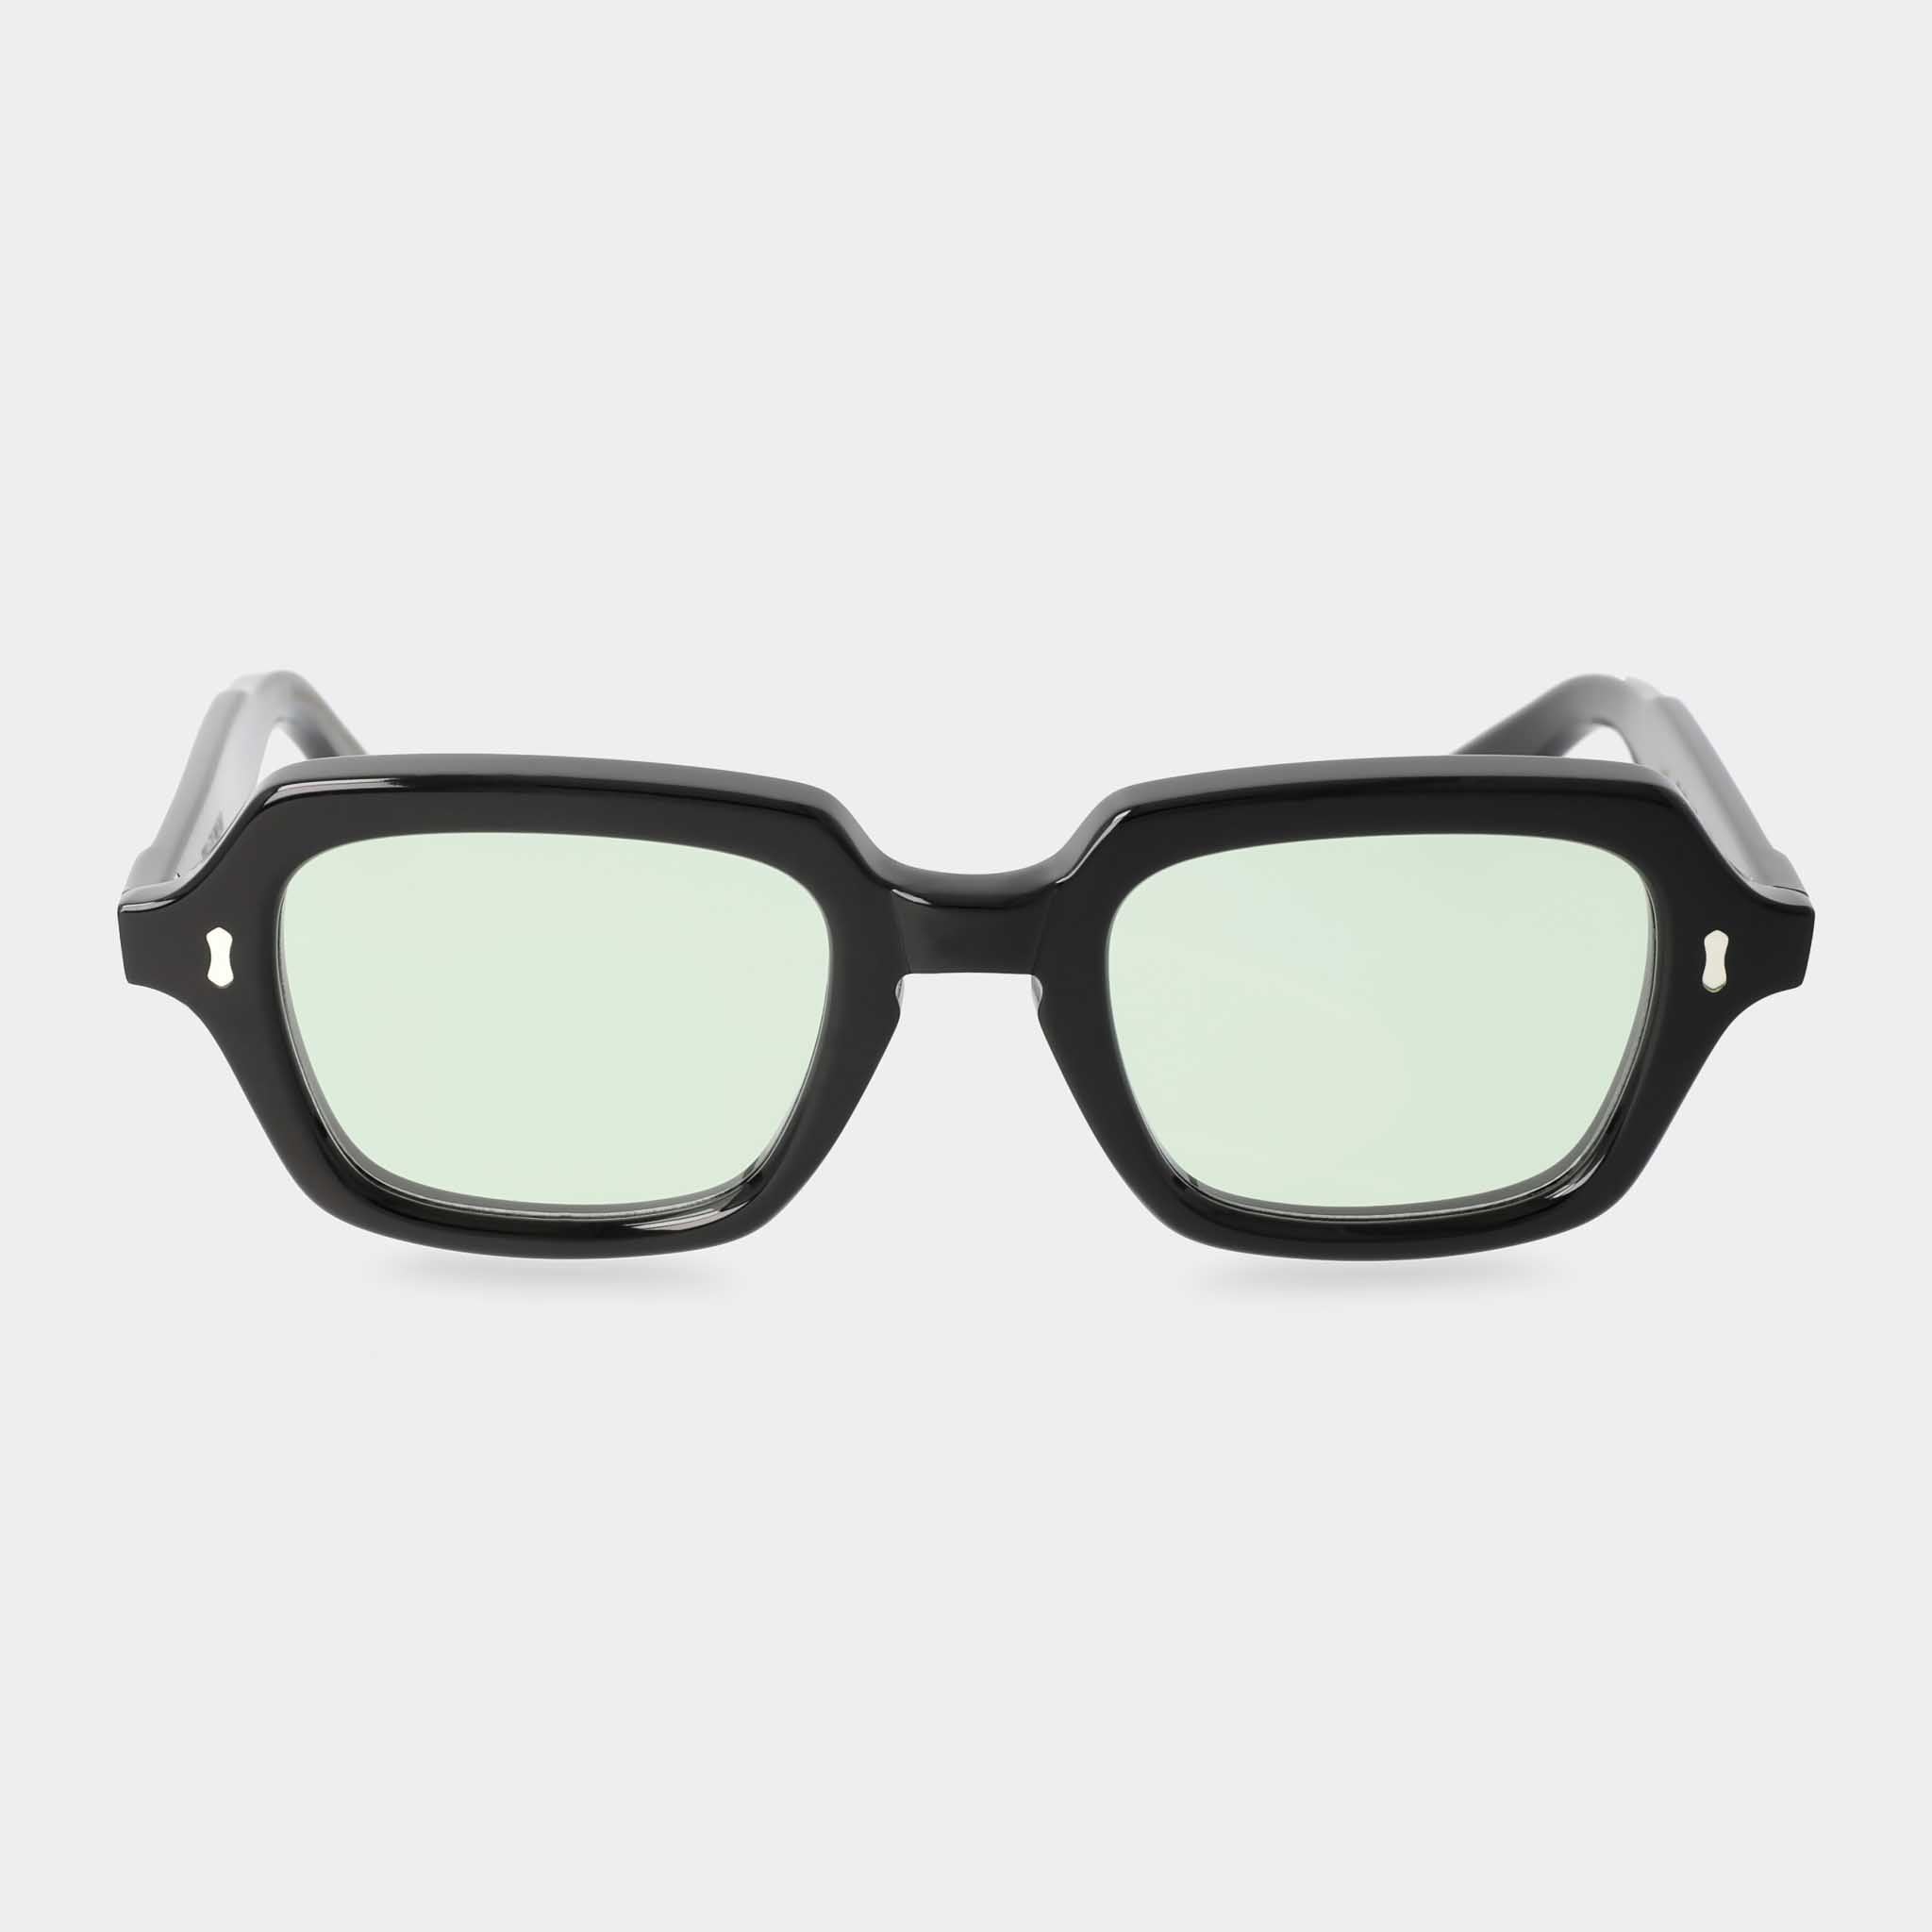 sunglasses-oak-eco-black-light-green-sustainable-tbd-eyewear-front